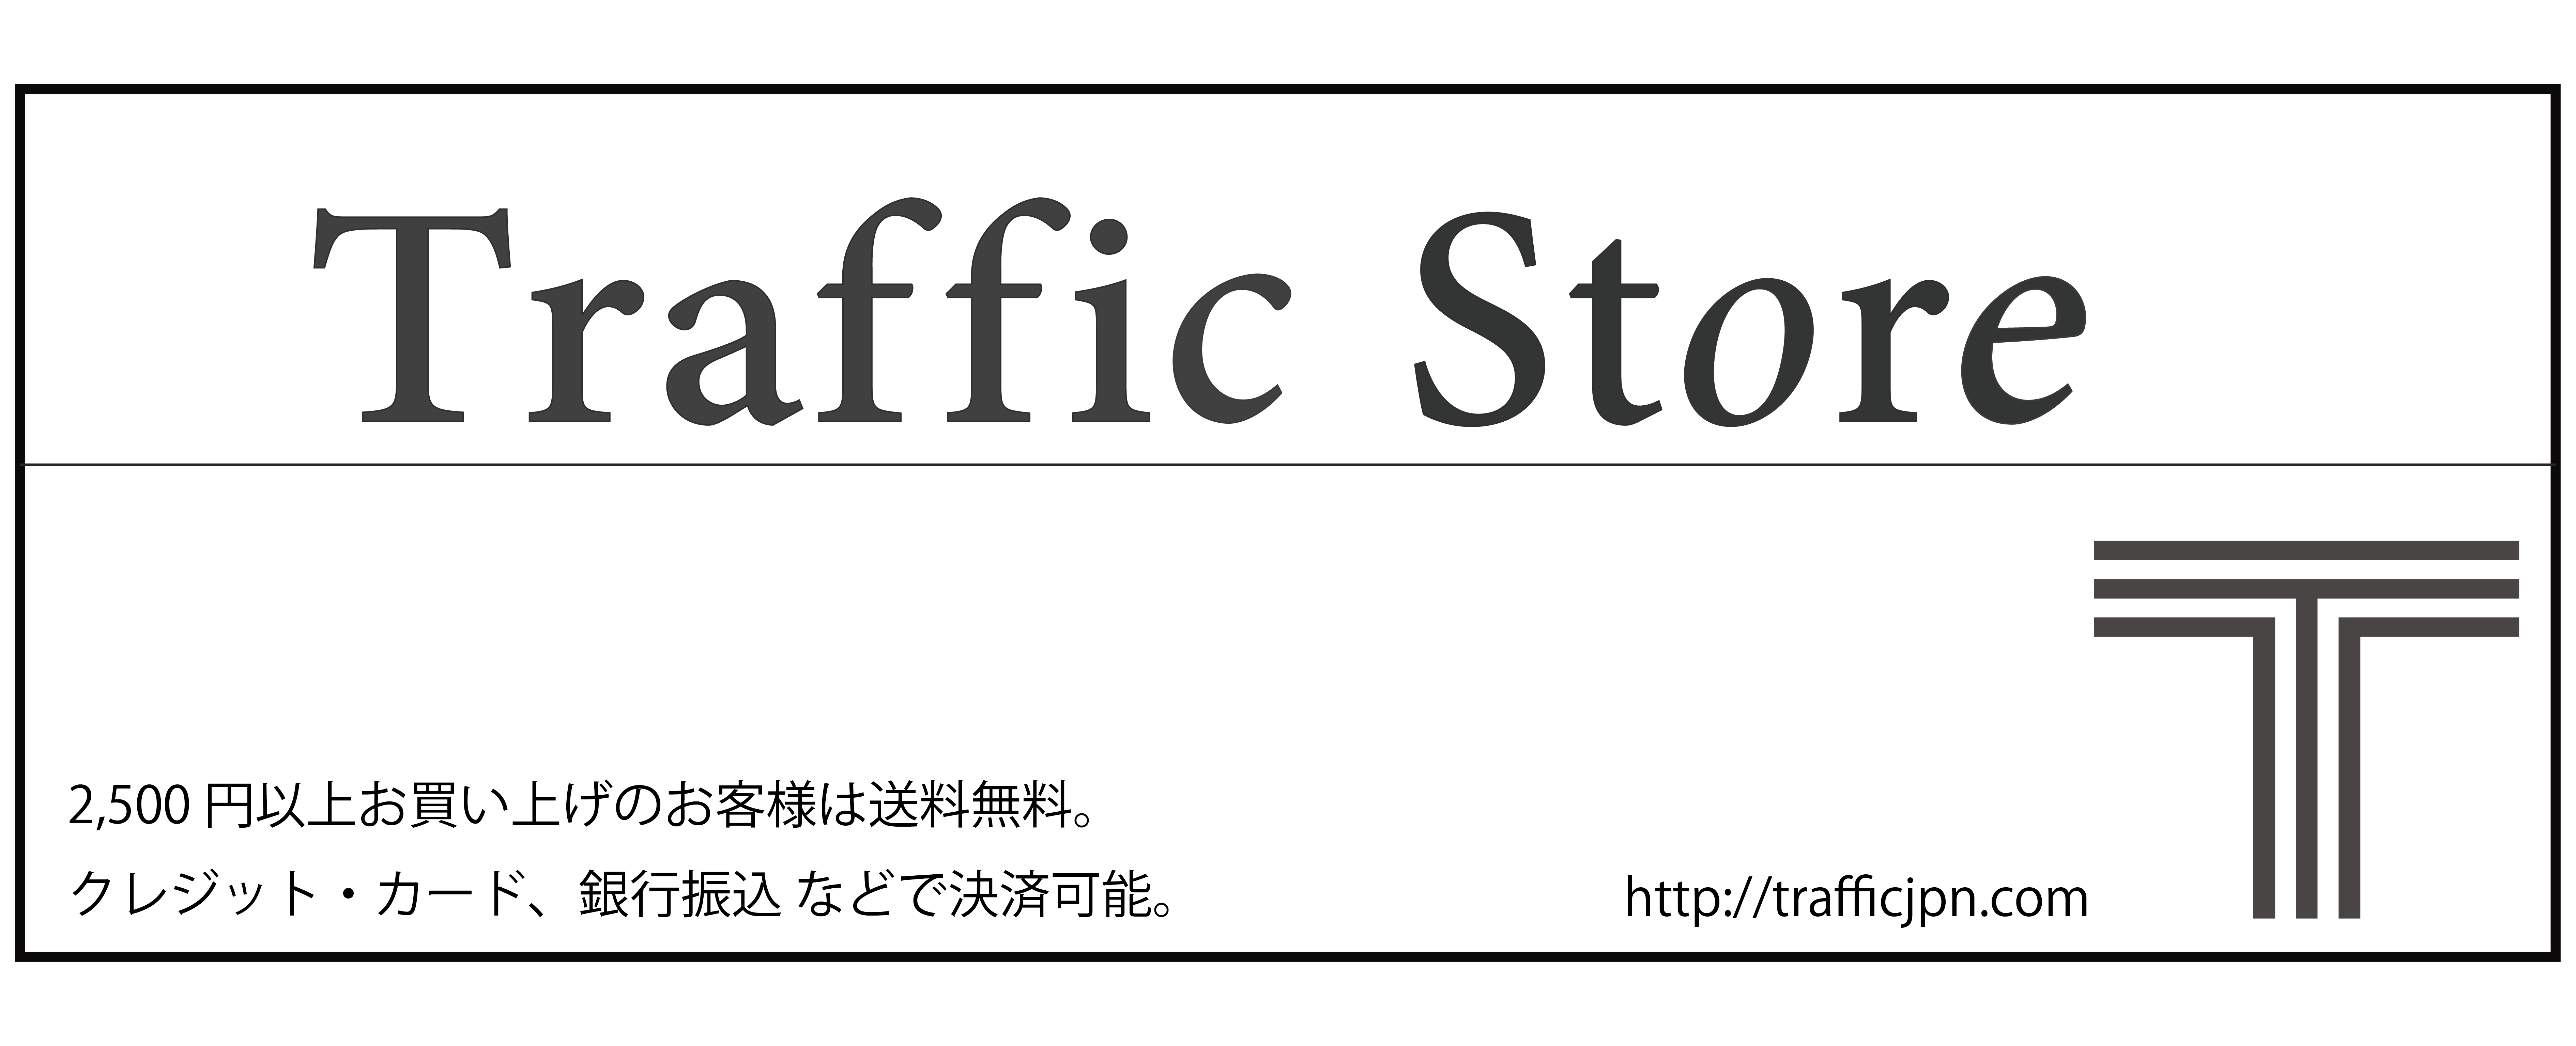 Traffic Store